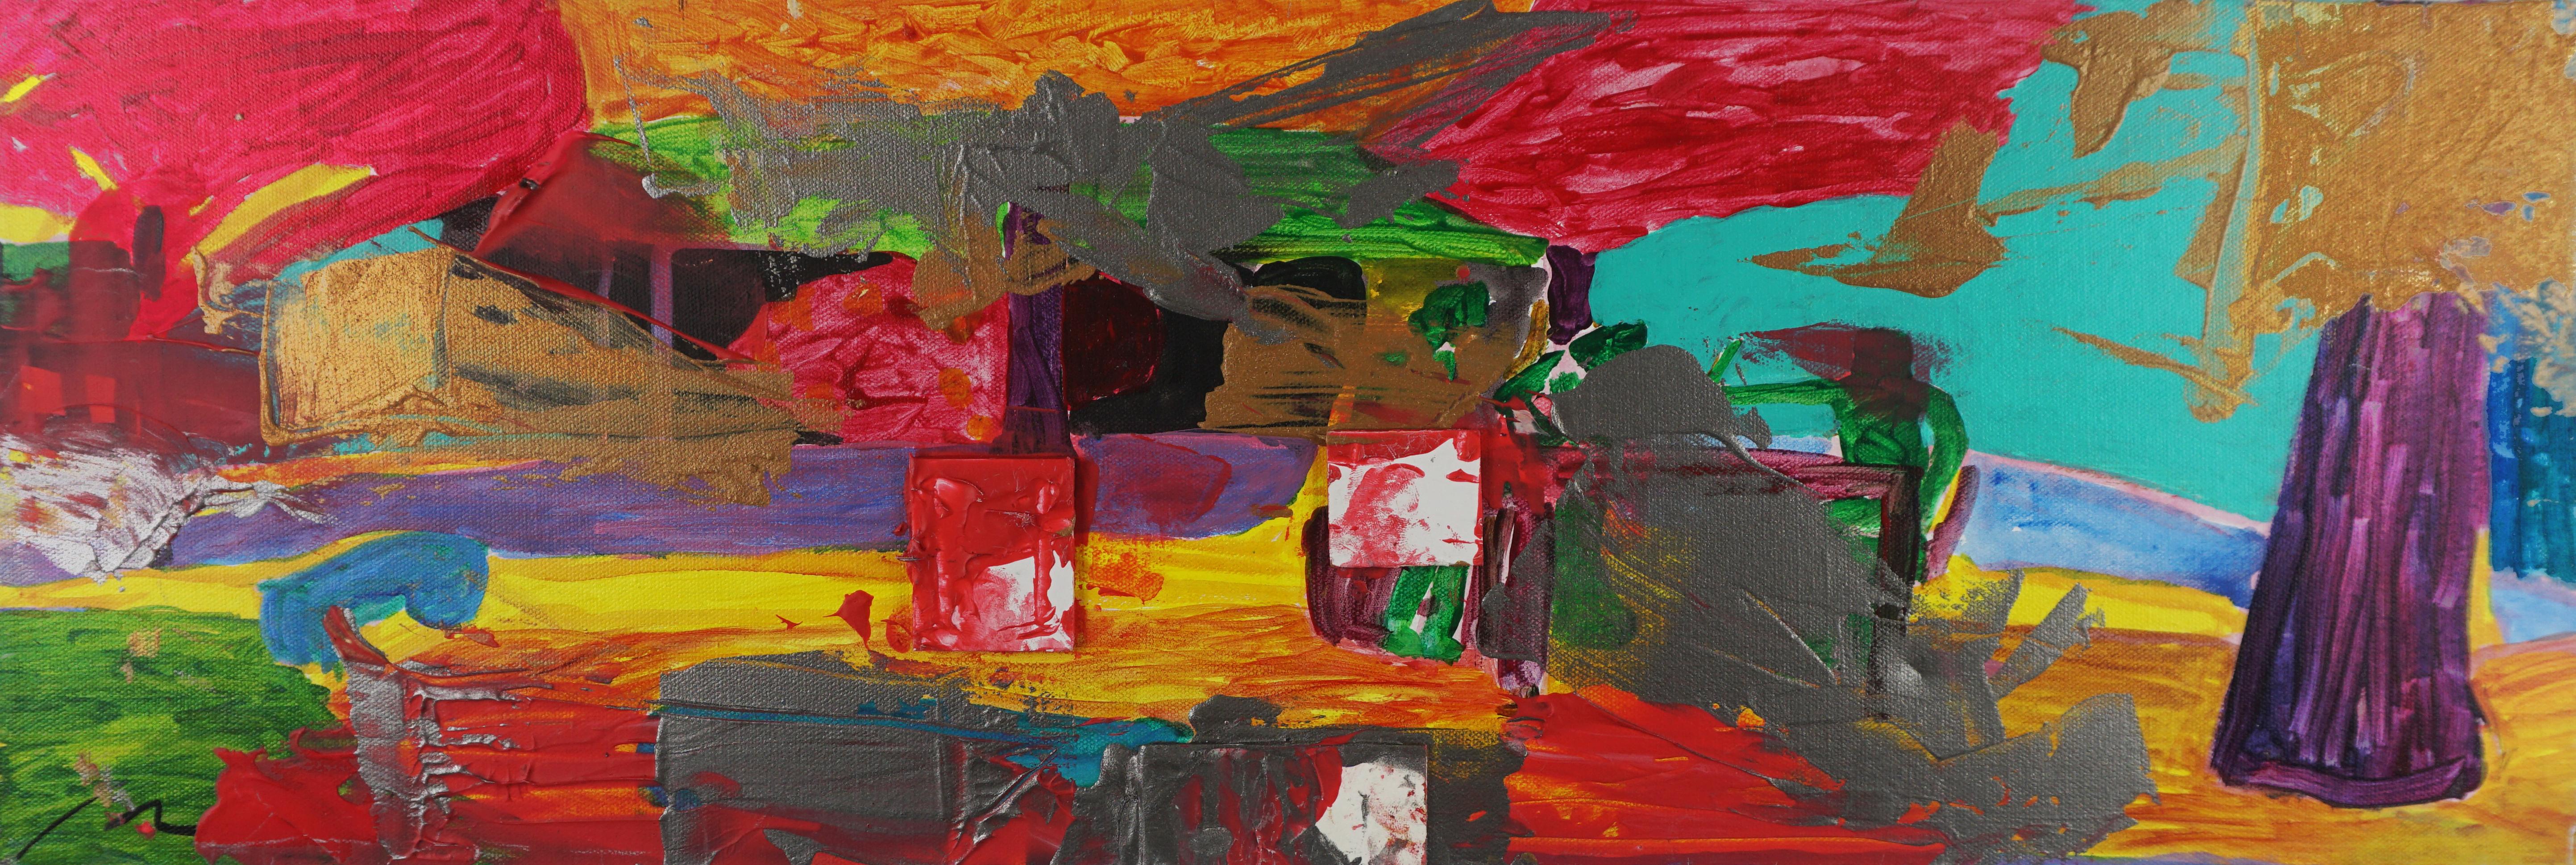 Paysage horizontal expressionniste abstrait multicolore 